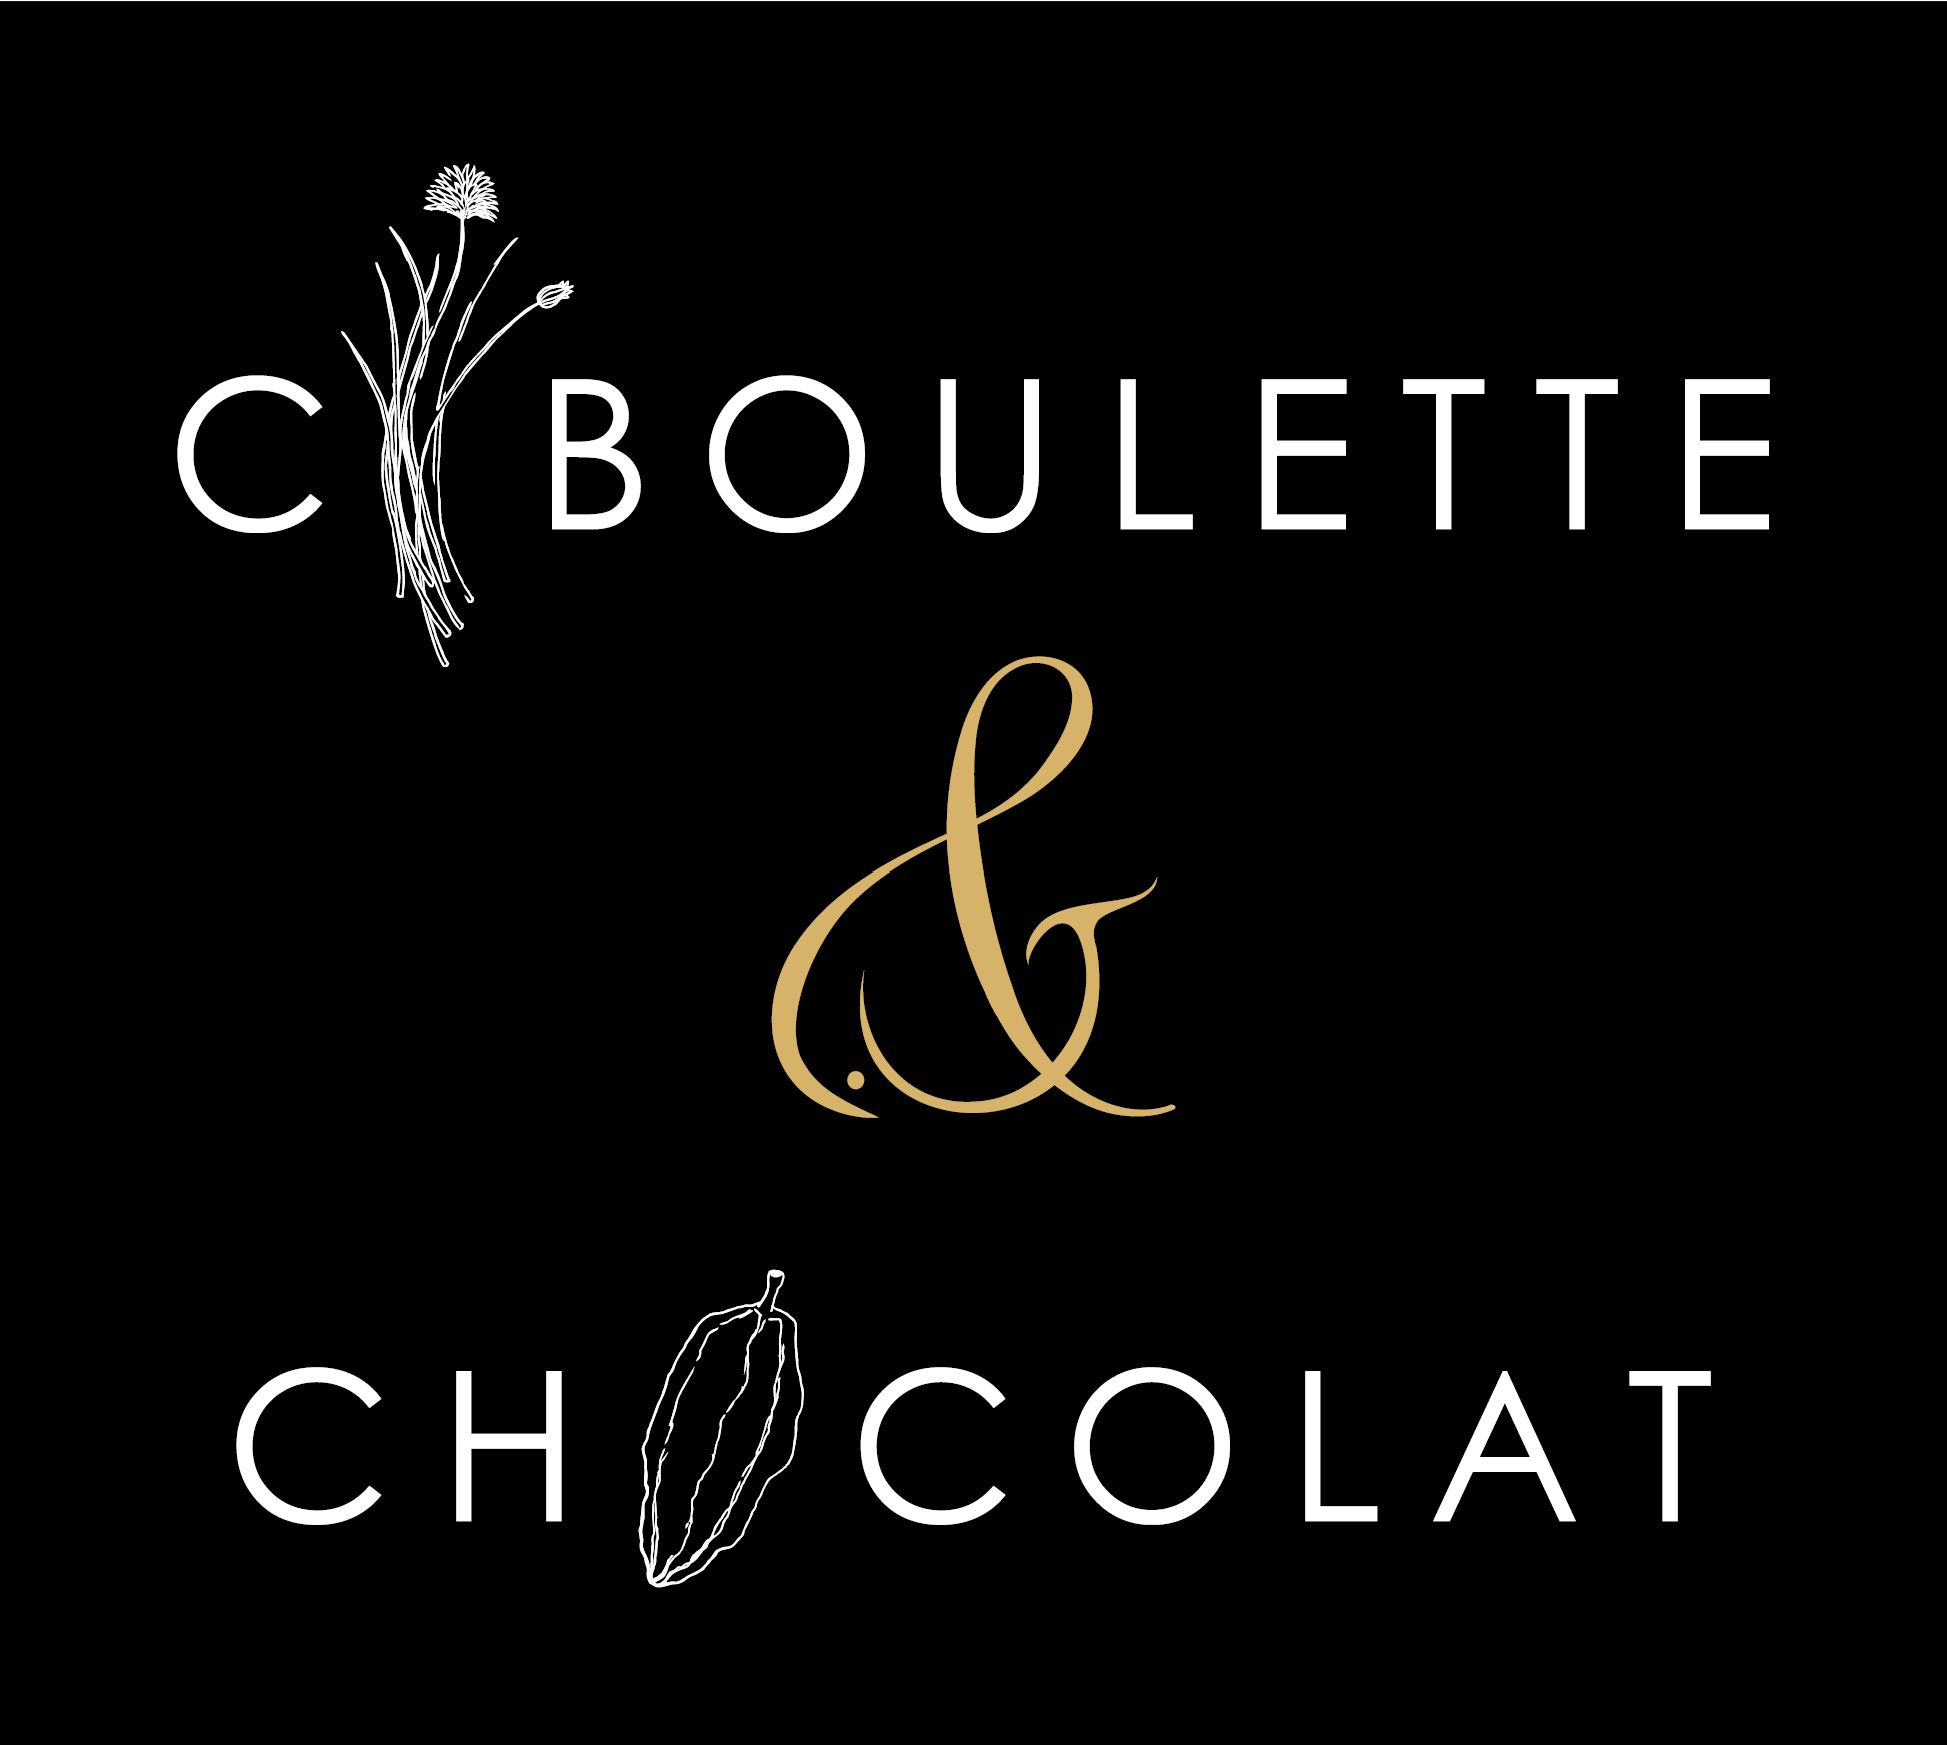 Ciboulette & Chocolat